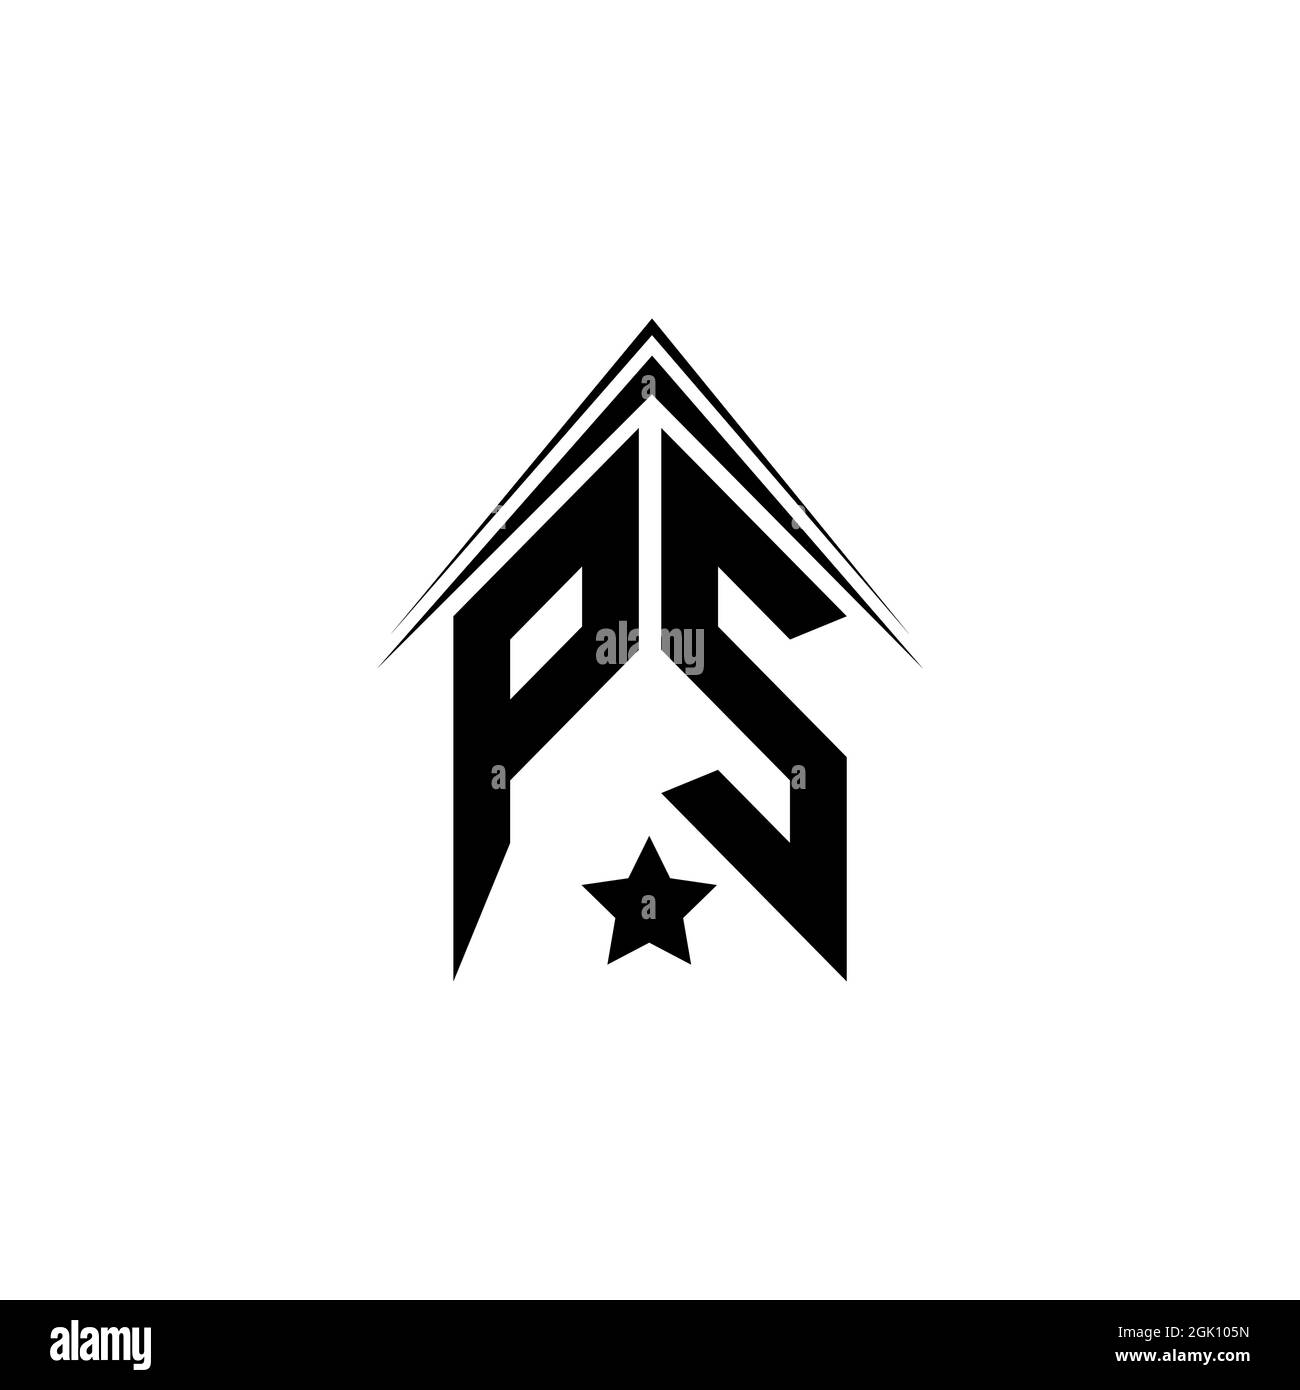 ps logo design